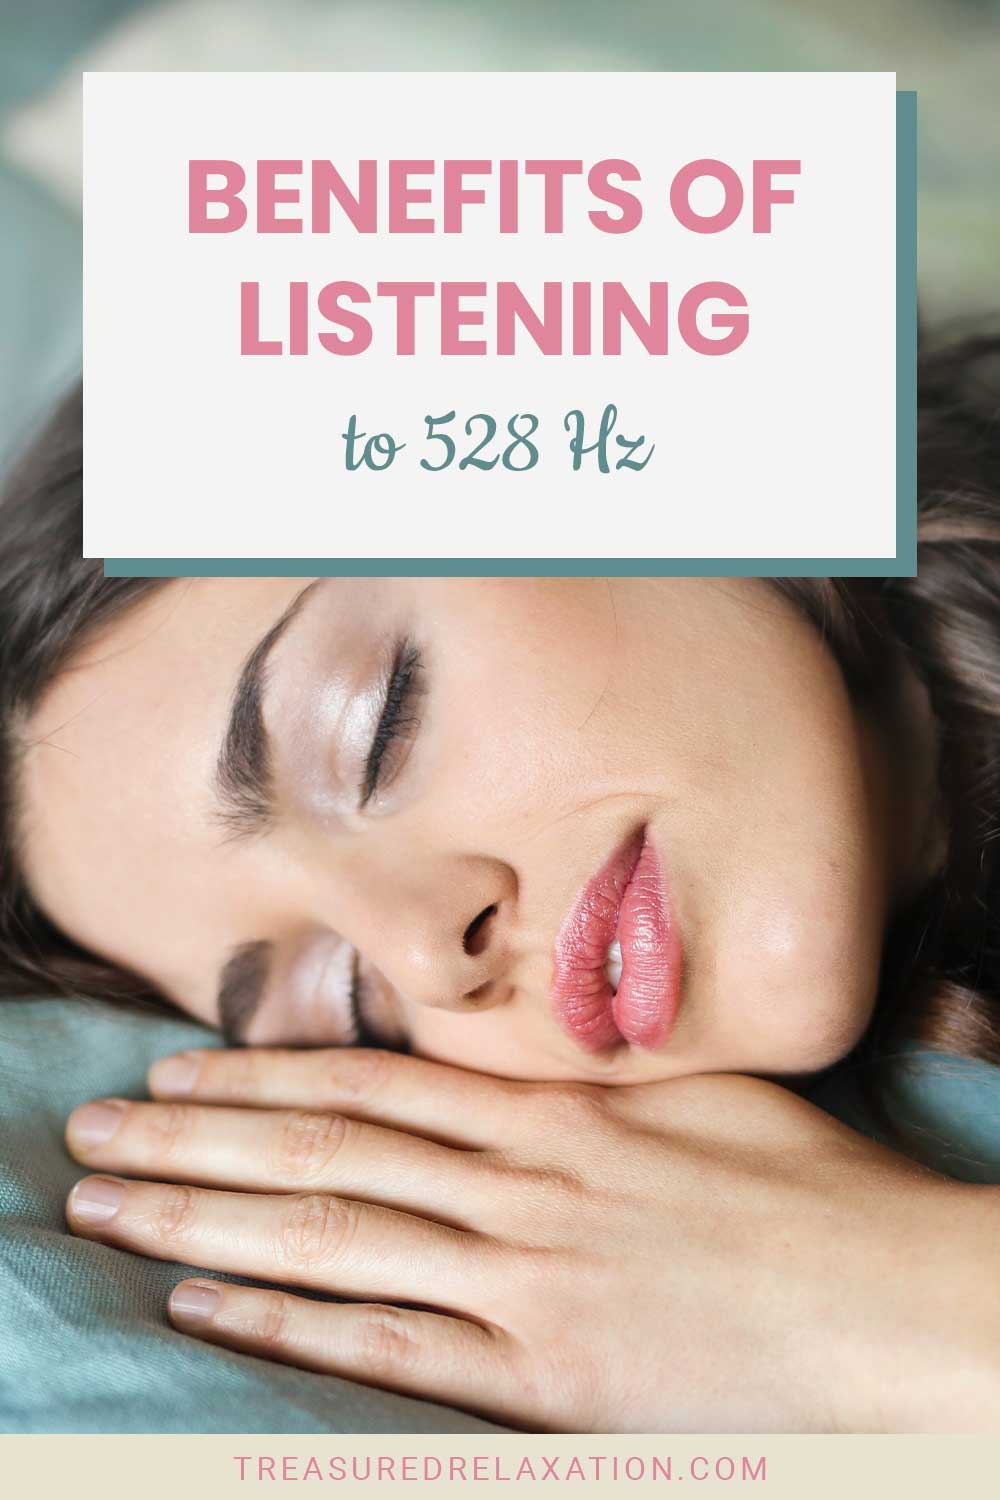 Benefits of Listening to 528 Hz